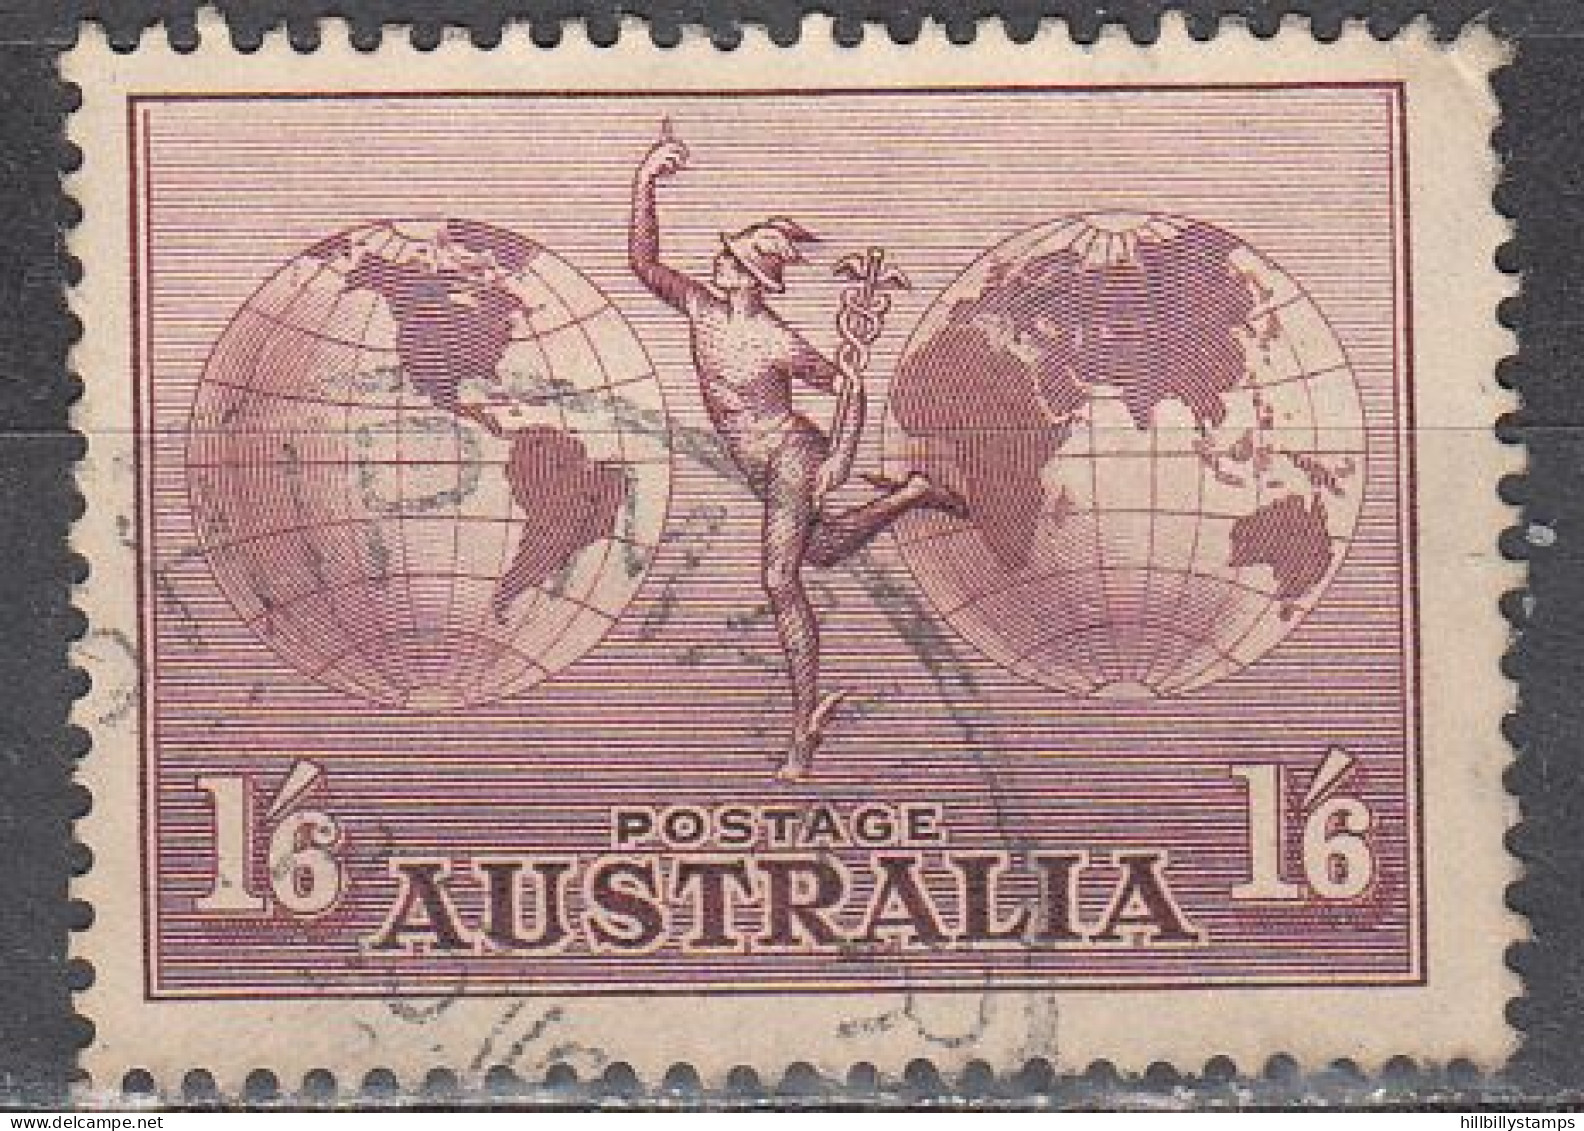 AUSTRALIA   SCOTT NO C5  USED   YEAR  1937 - Oblitérés